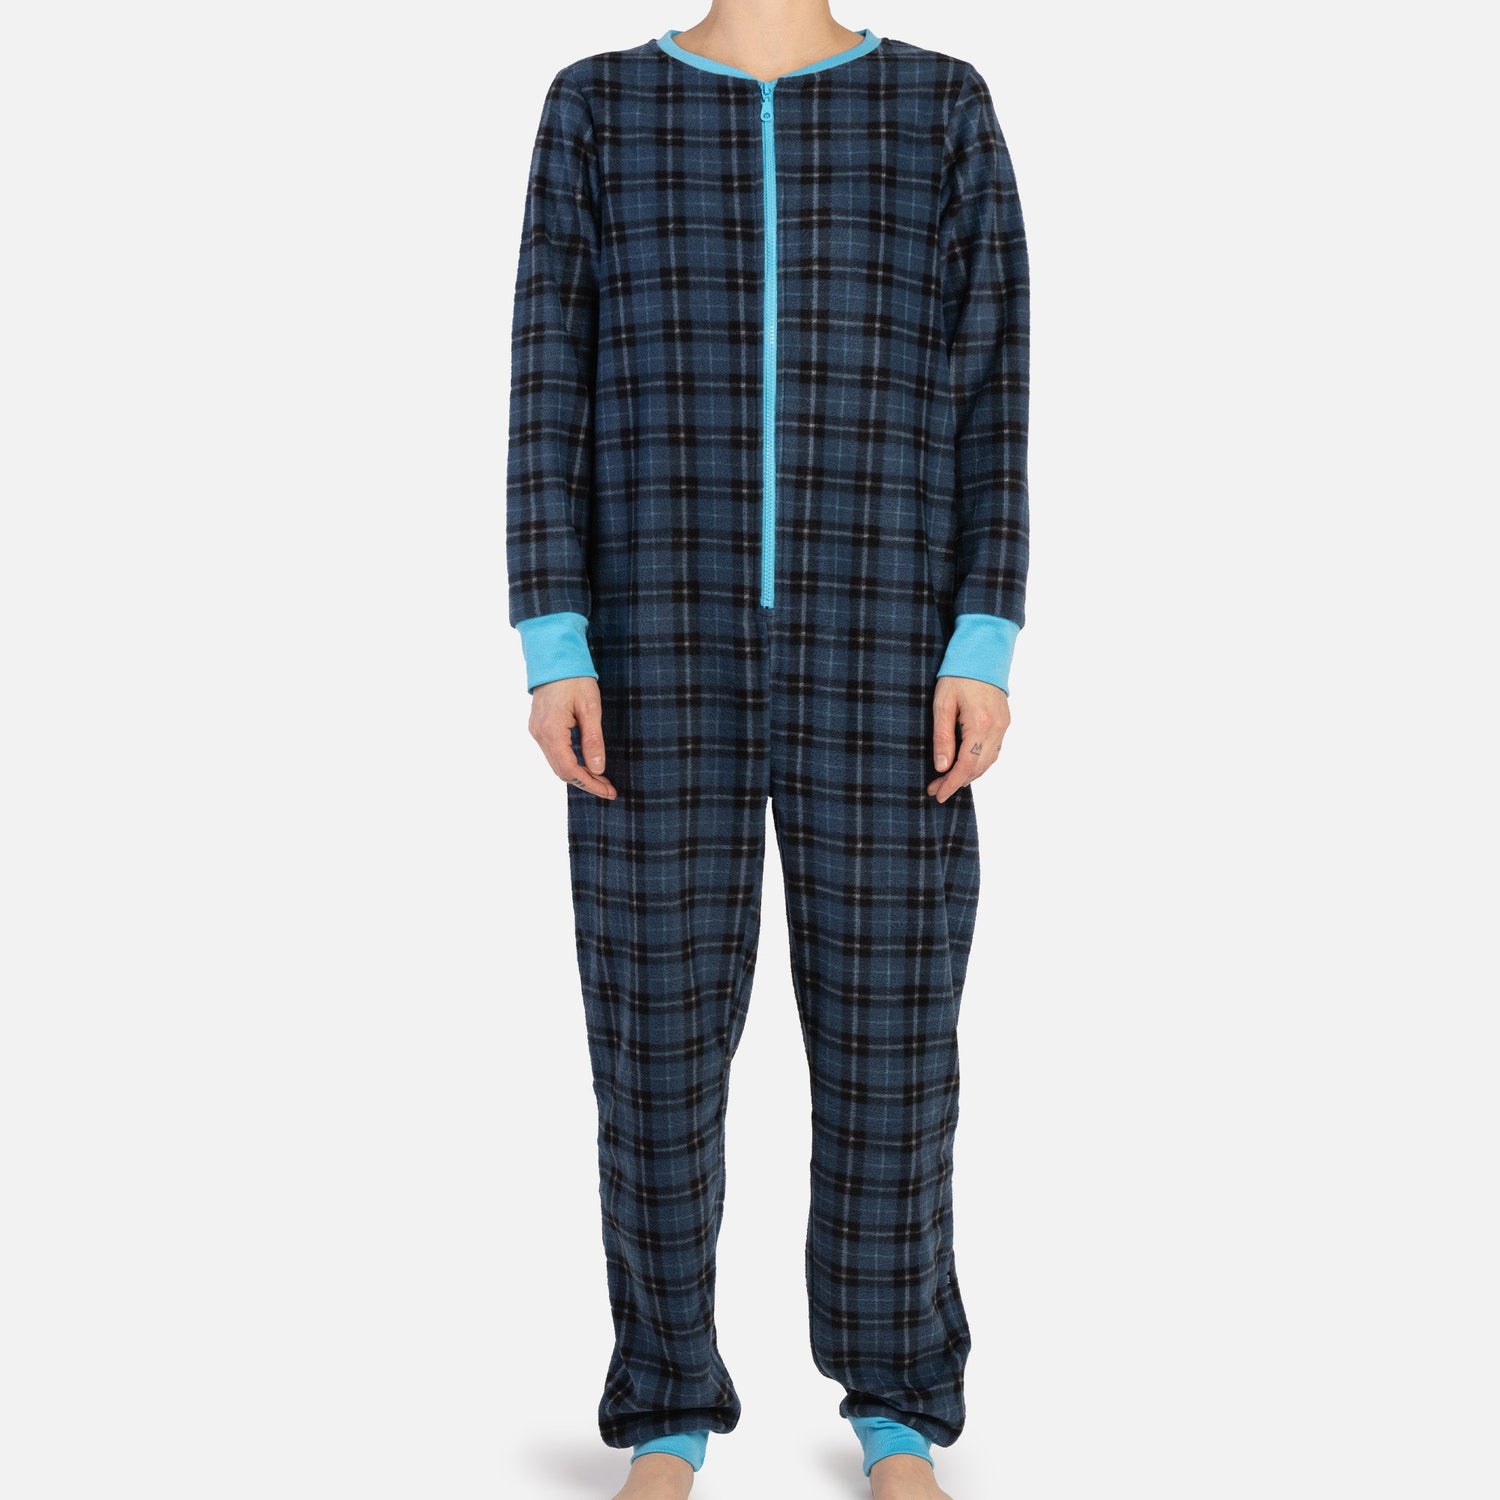 Blue Plaid Matching Human Pajamas